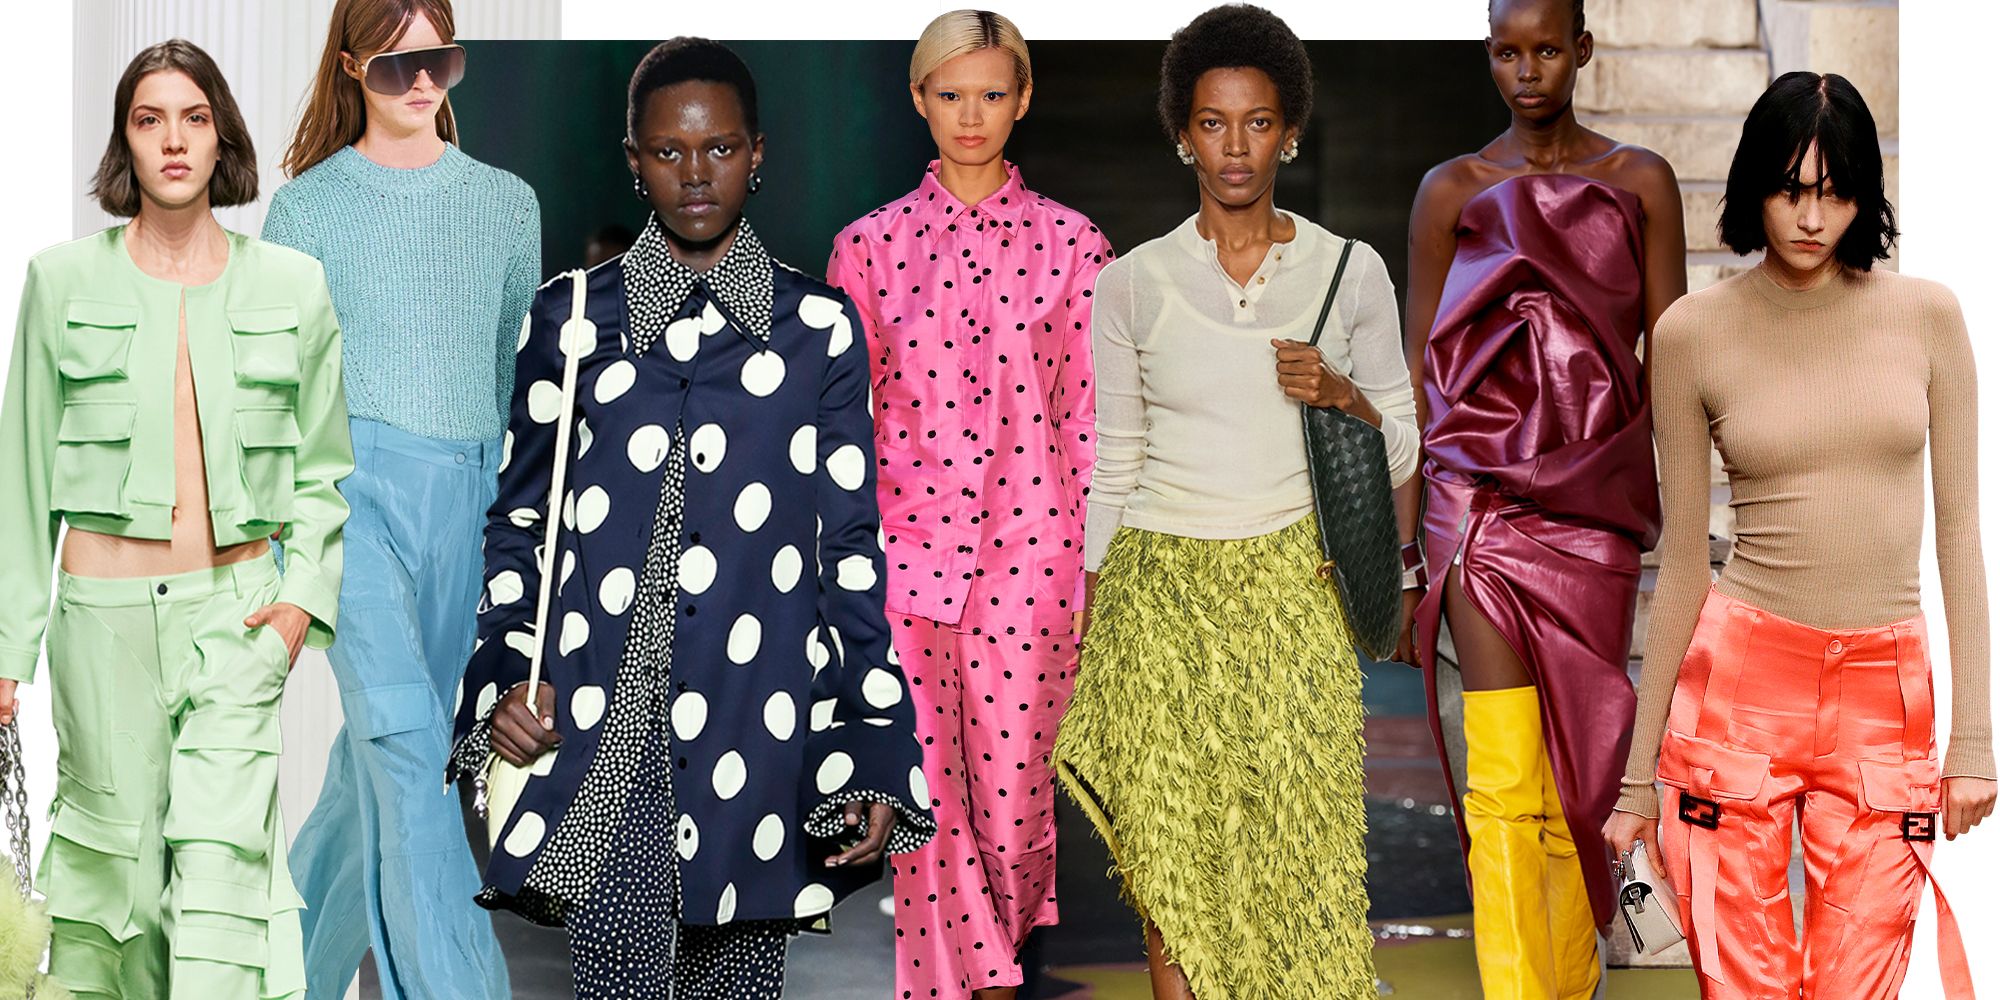 Le Fashion: 3 WAYS TO WEAR A STRIPED TANK TOP